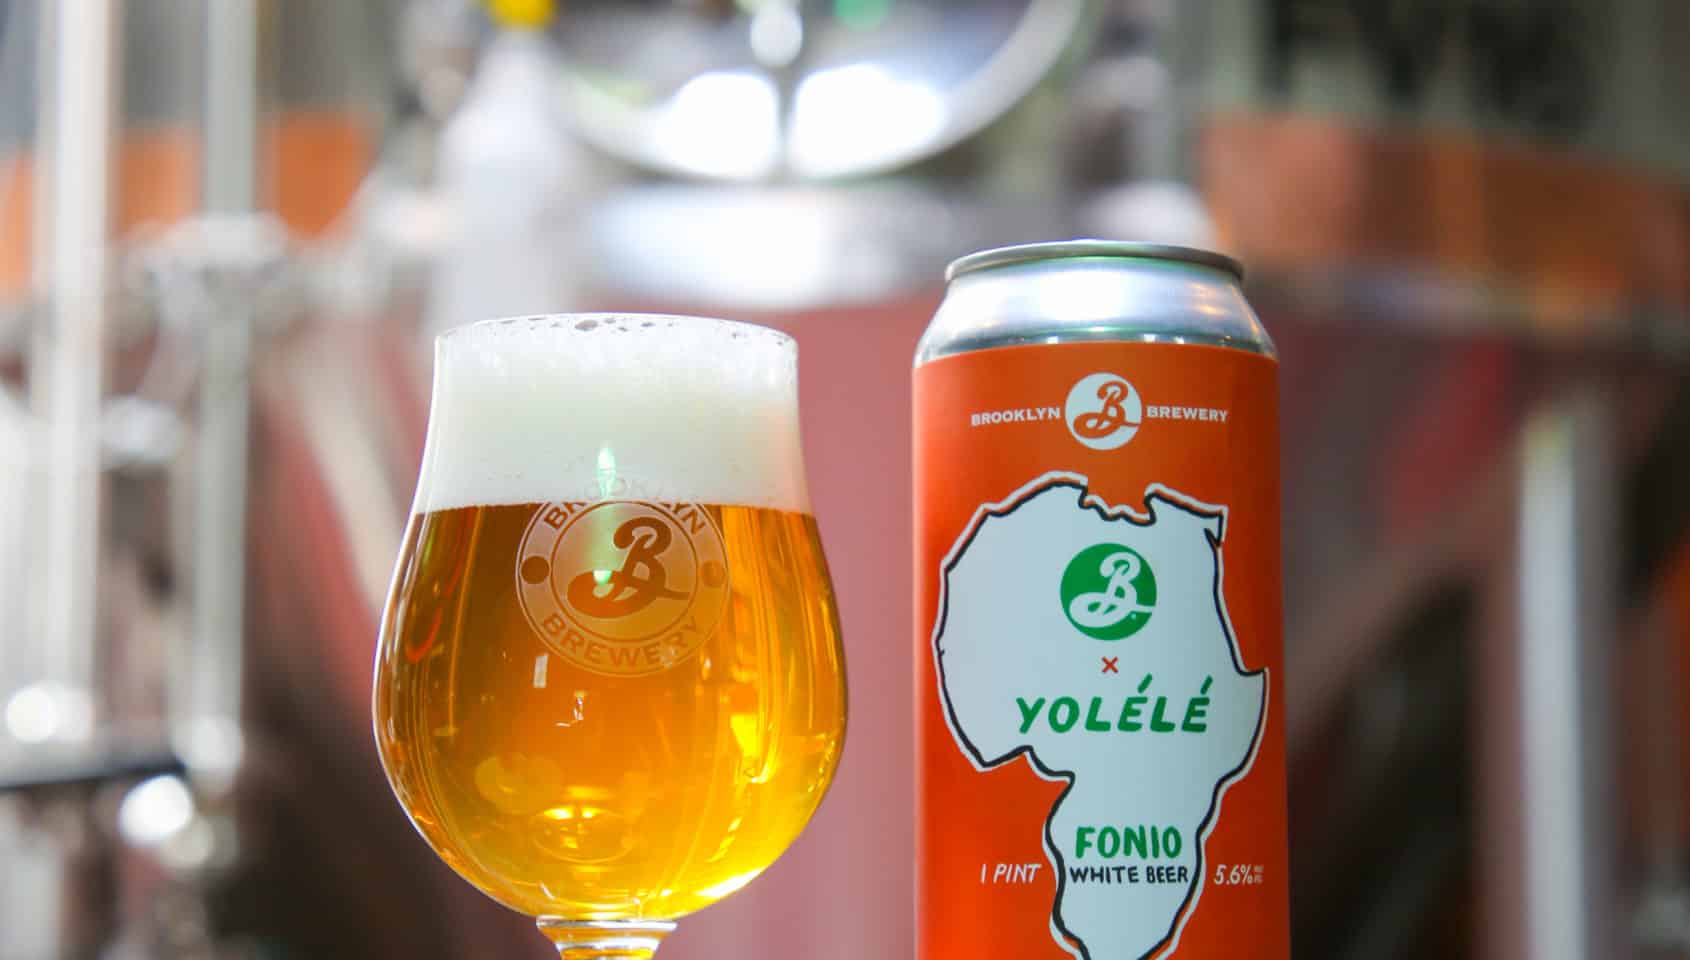 Brooklyn Brewery x Yolélé Fonio White Beer | Brooklyn Brewery